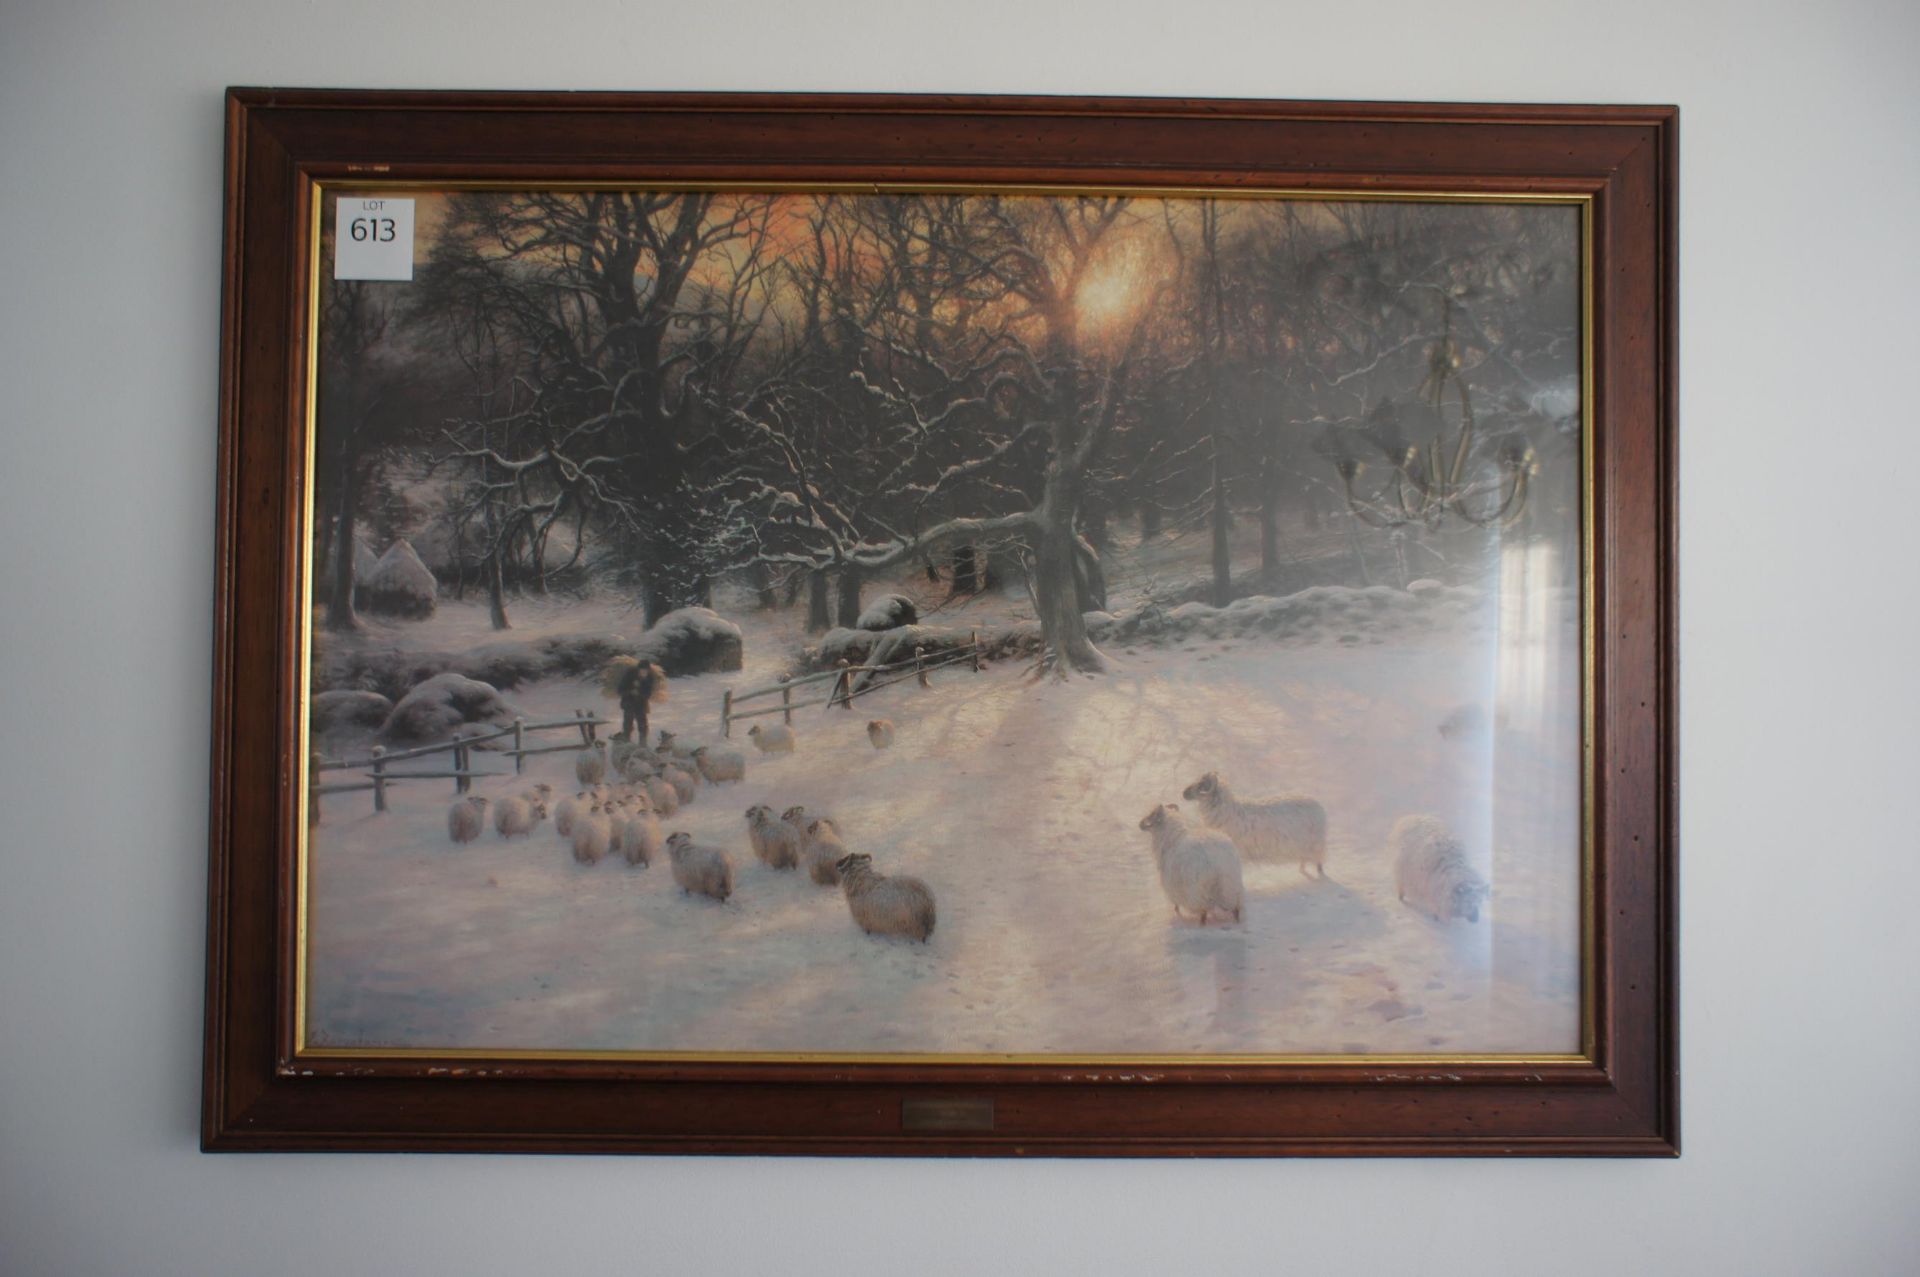 Joseph Farouharson “Shortening Winter Day” Framed and Glazed Print (865mm x 620mm)